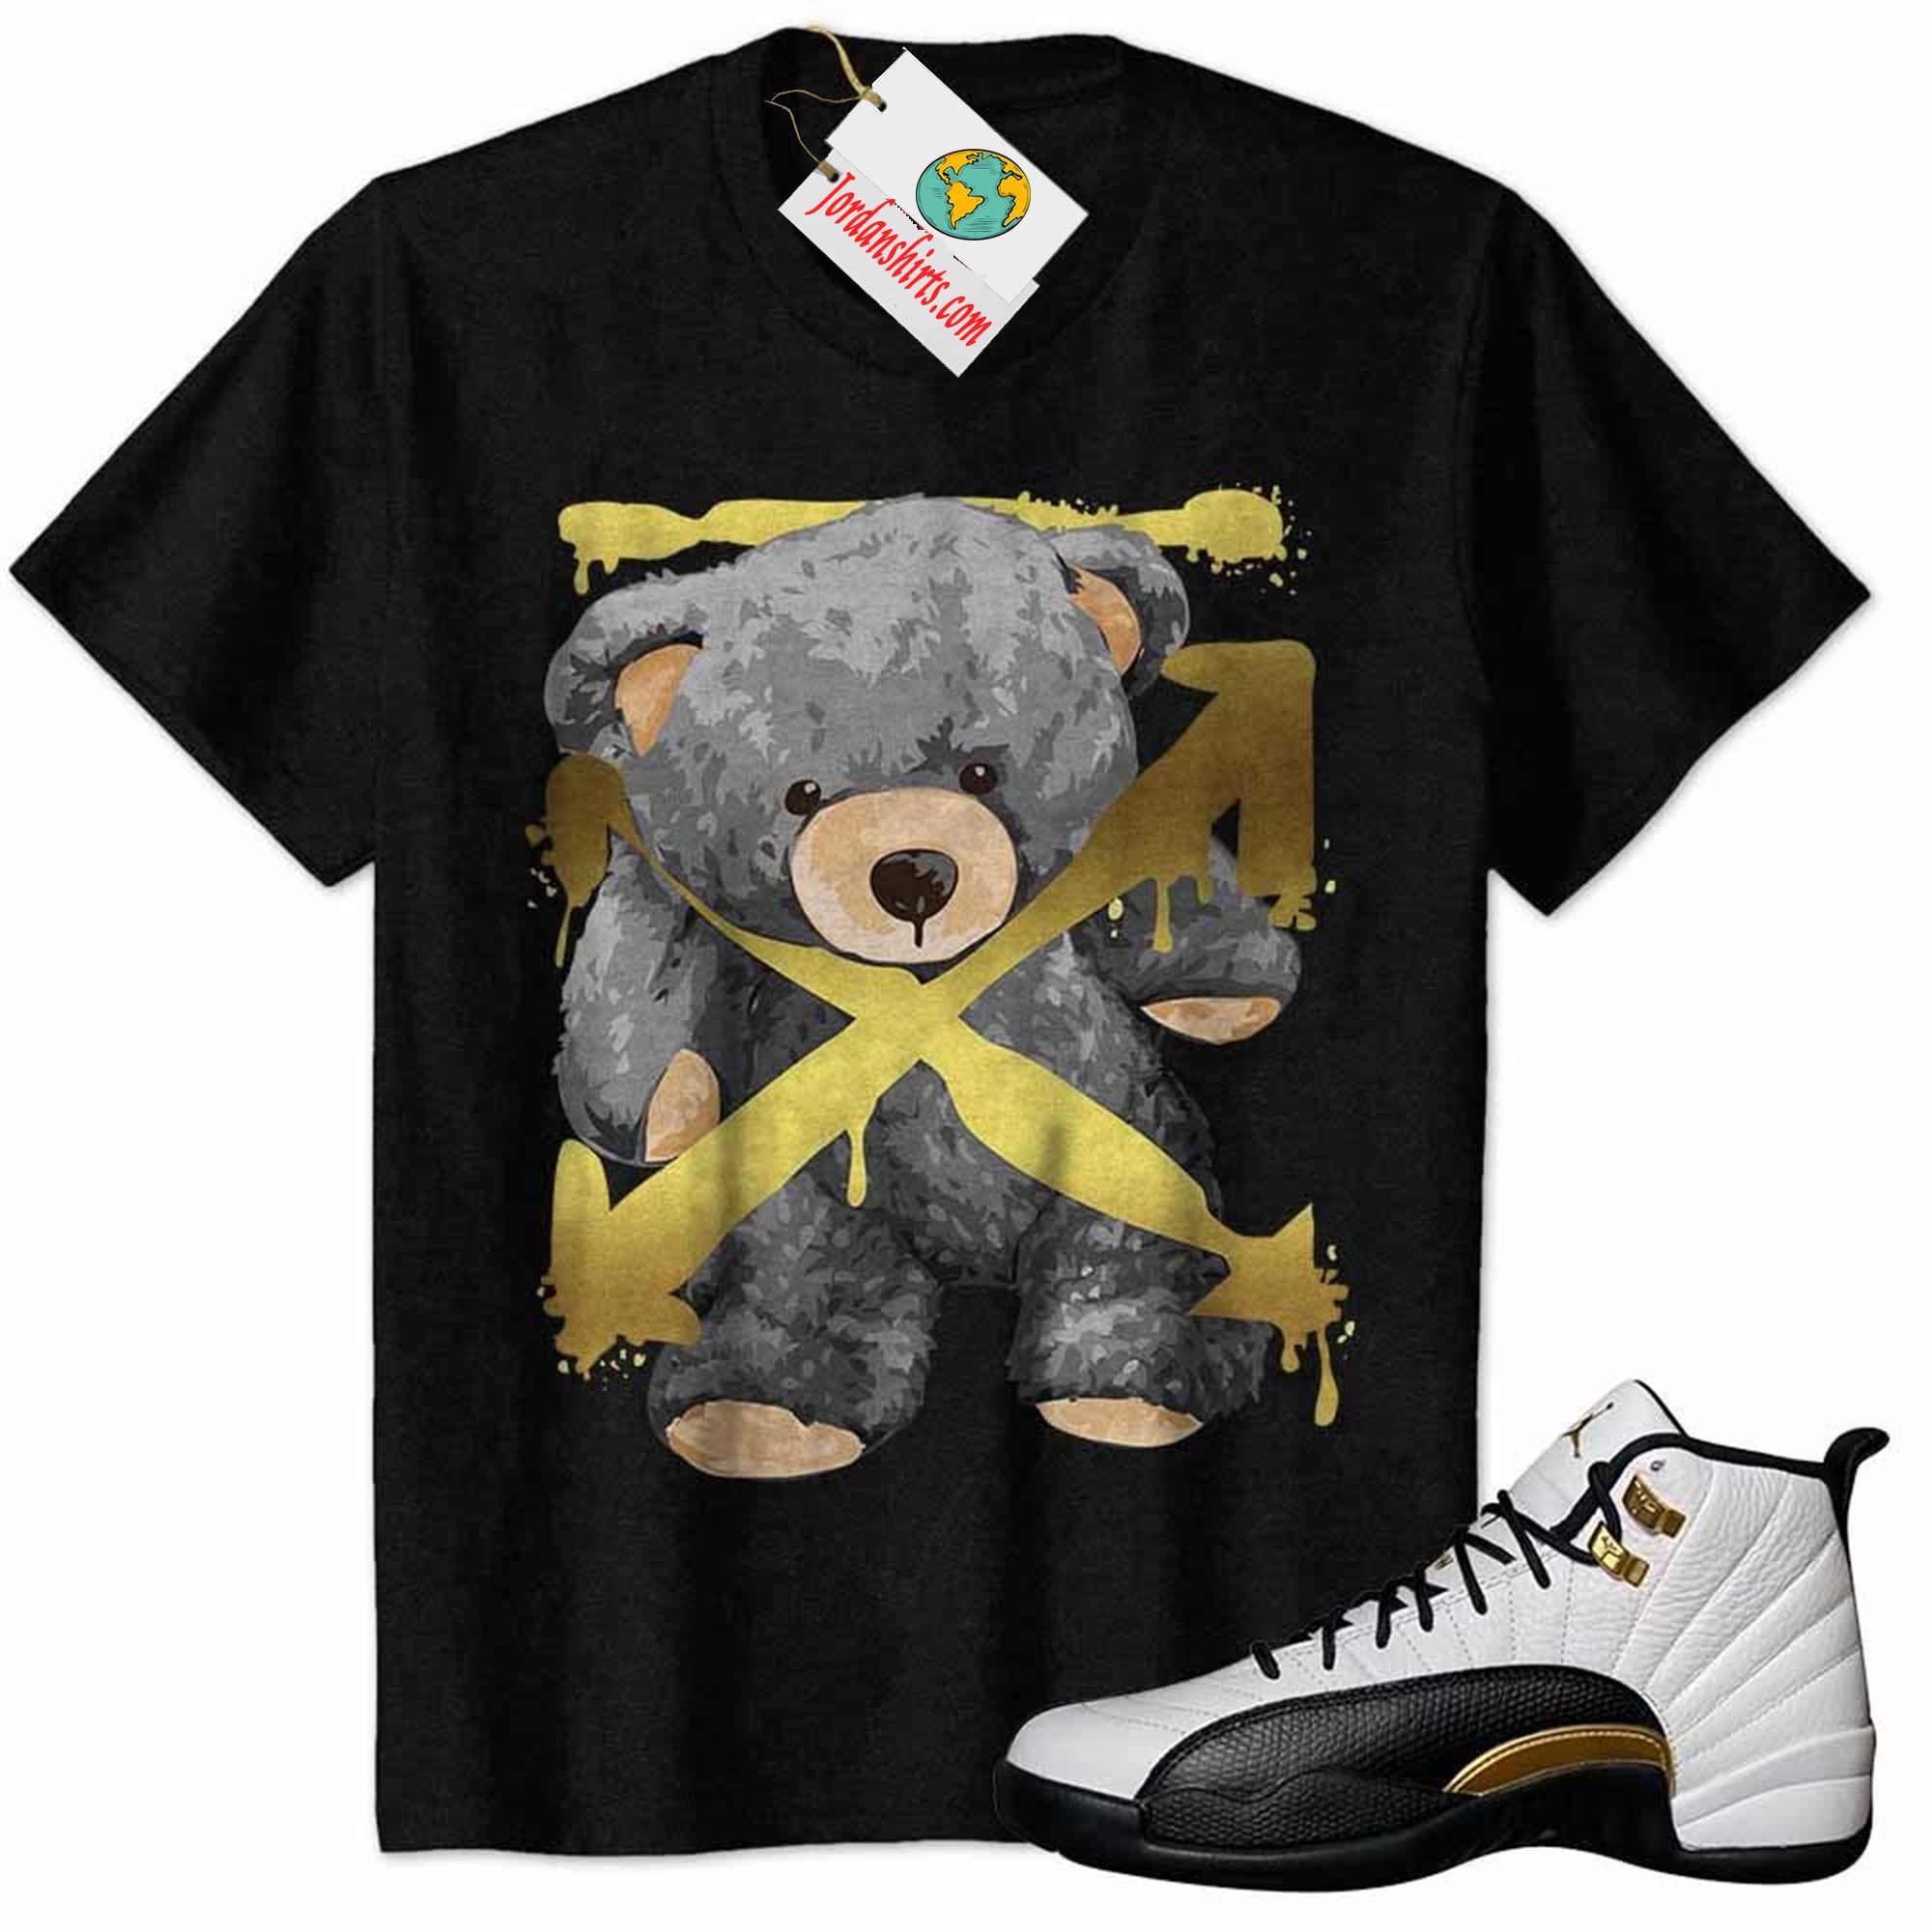 Jordan 12 Shirt, Teddy Bear Off White Paint Dripping Black Air Jordan 12 Royalty 12s Size Up To 5xl